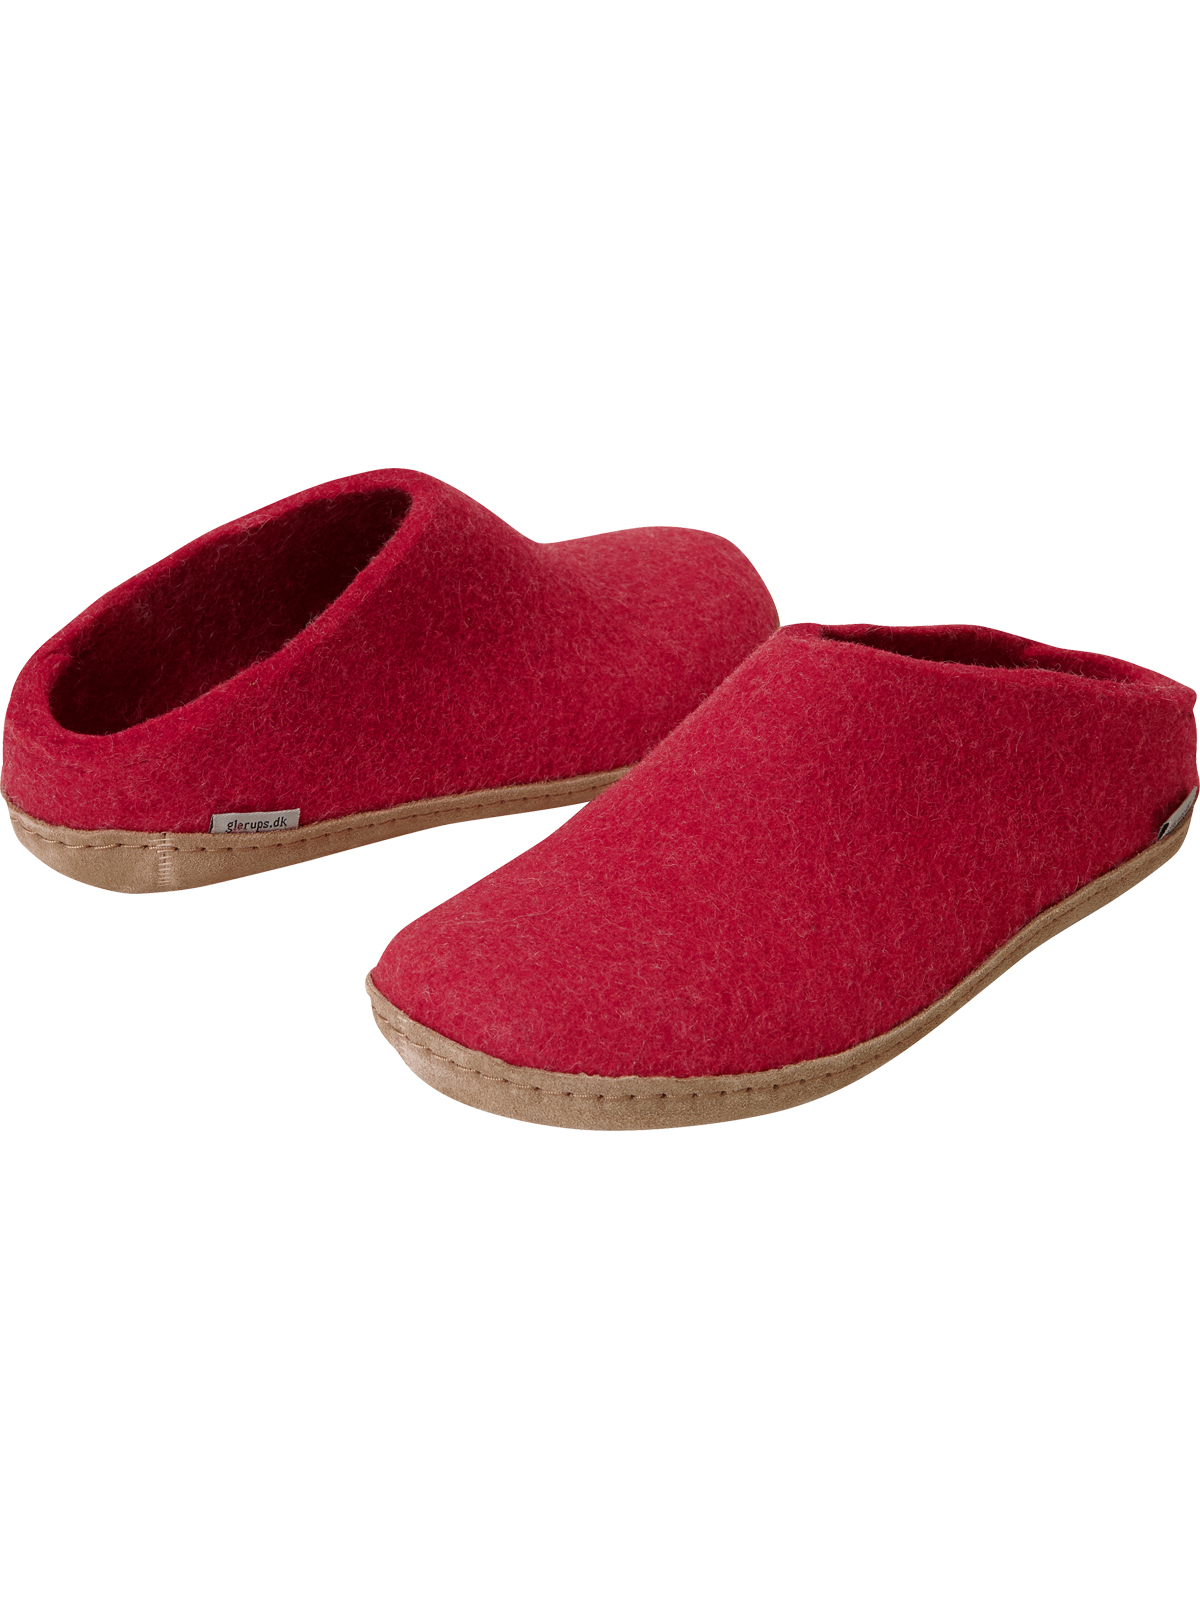 danish felted wool slippers